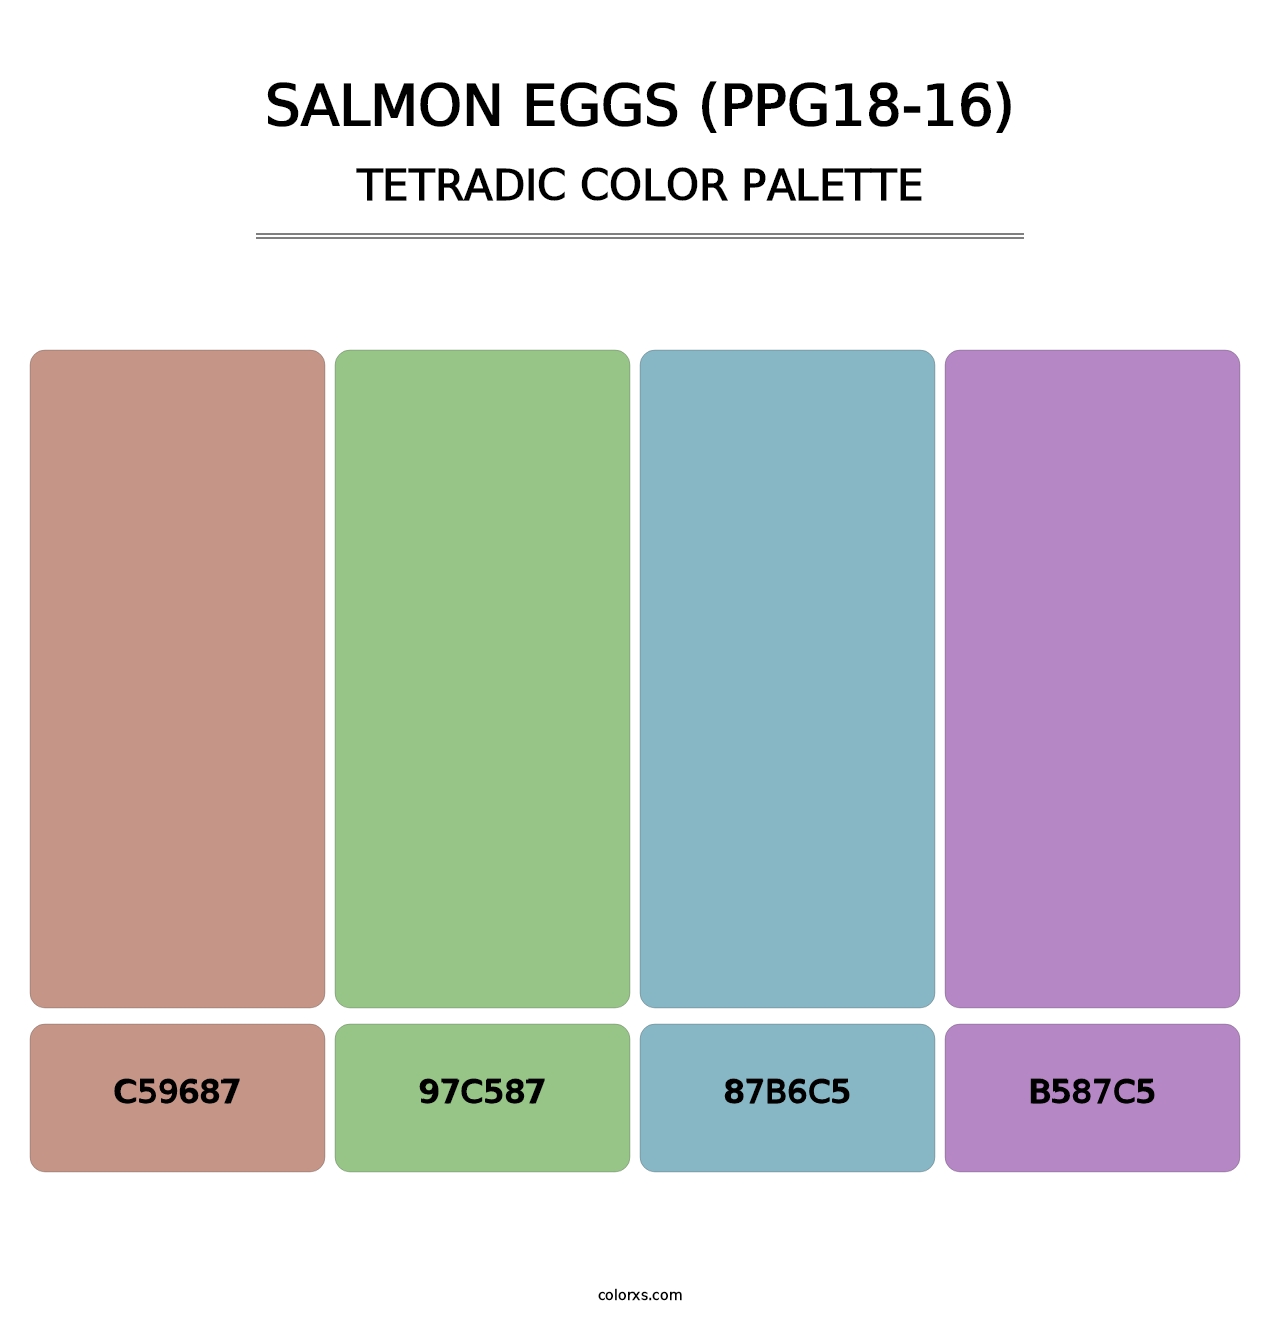 Salmon Eggs (PPG18-16) - Tetradic Color Palette